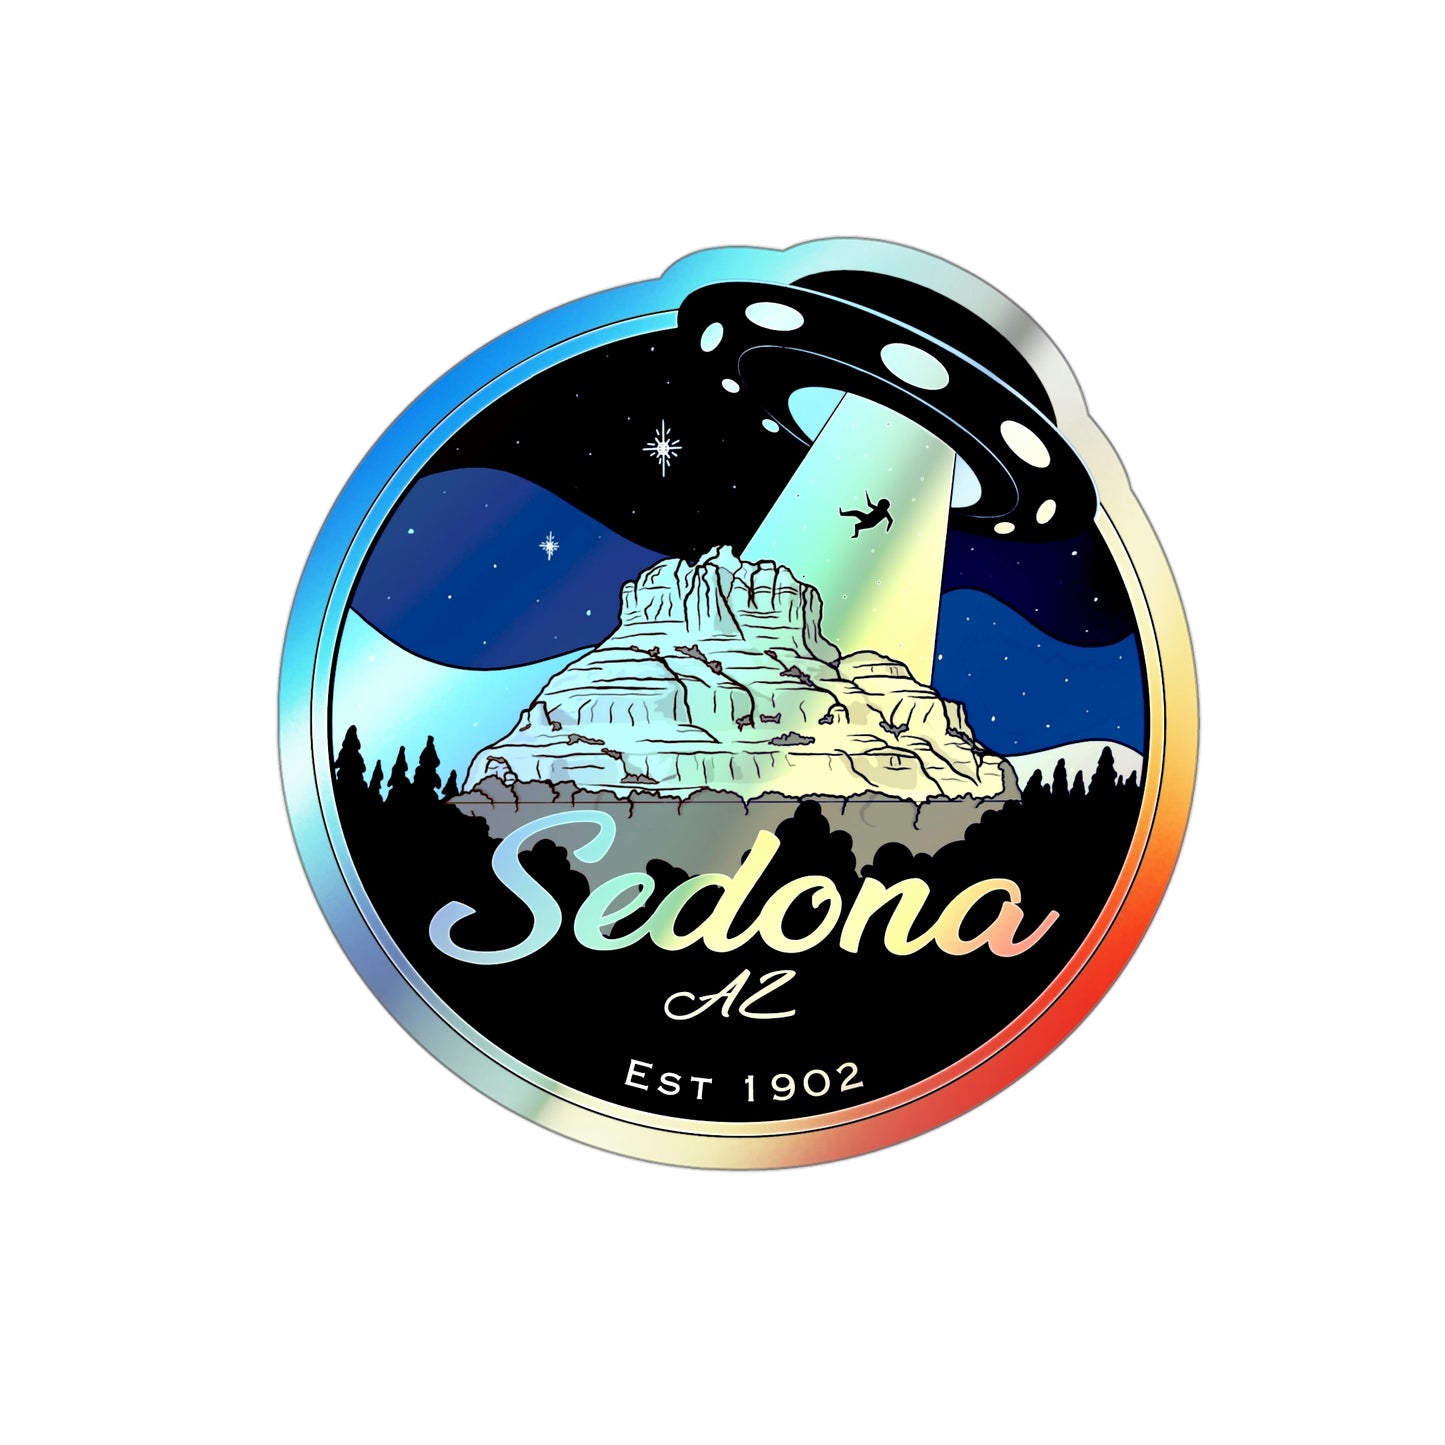 Sedona Holographic Die-cut Stickers - redrockmerchco